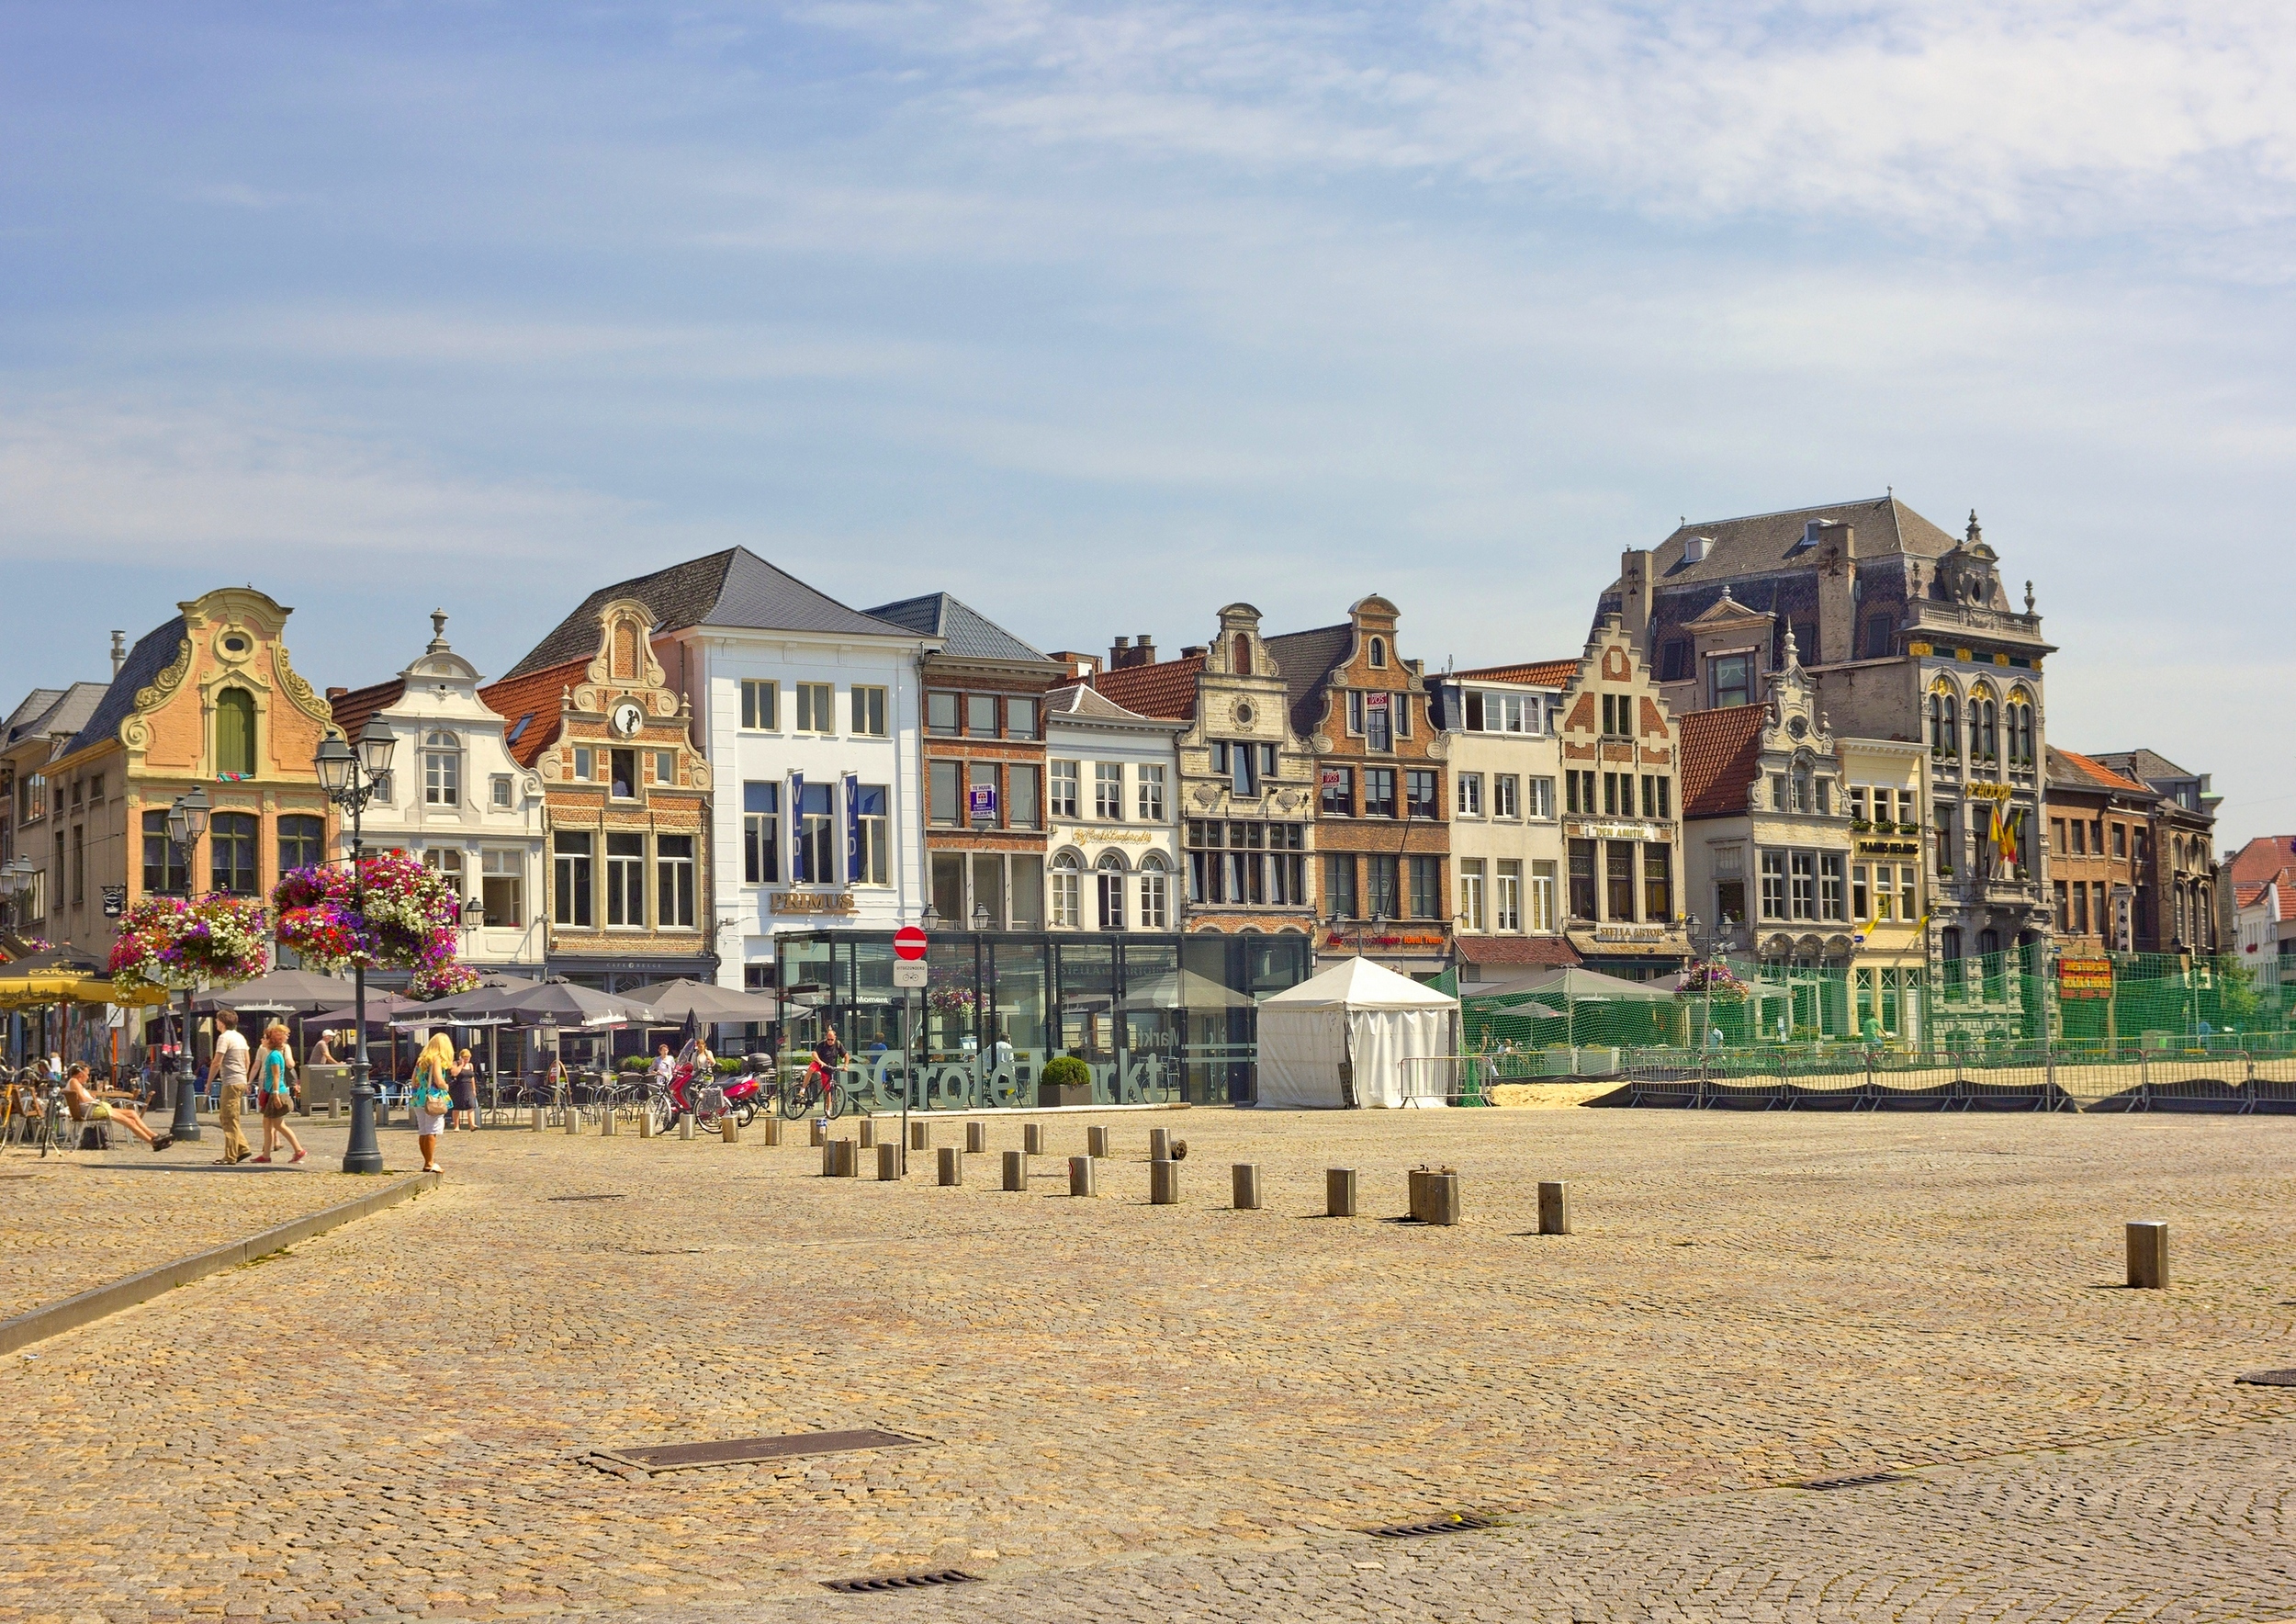 Town hall square in Mechelen, Belgium